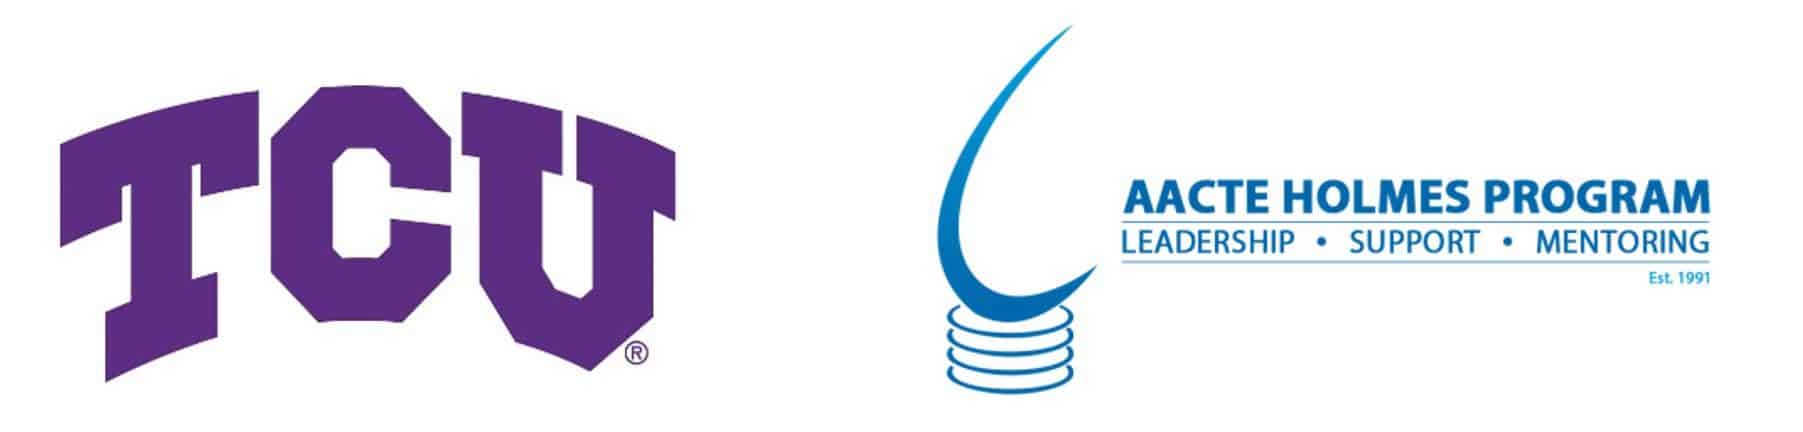 TCU - AACTE Holmes Scholars logo